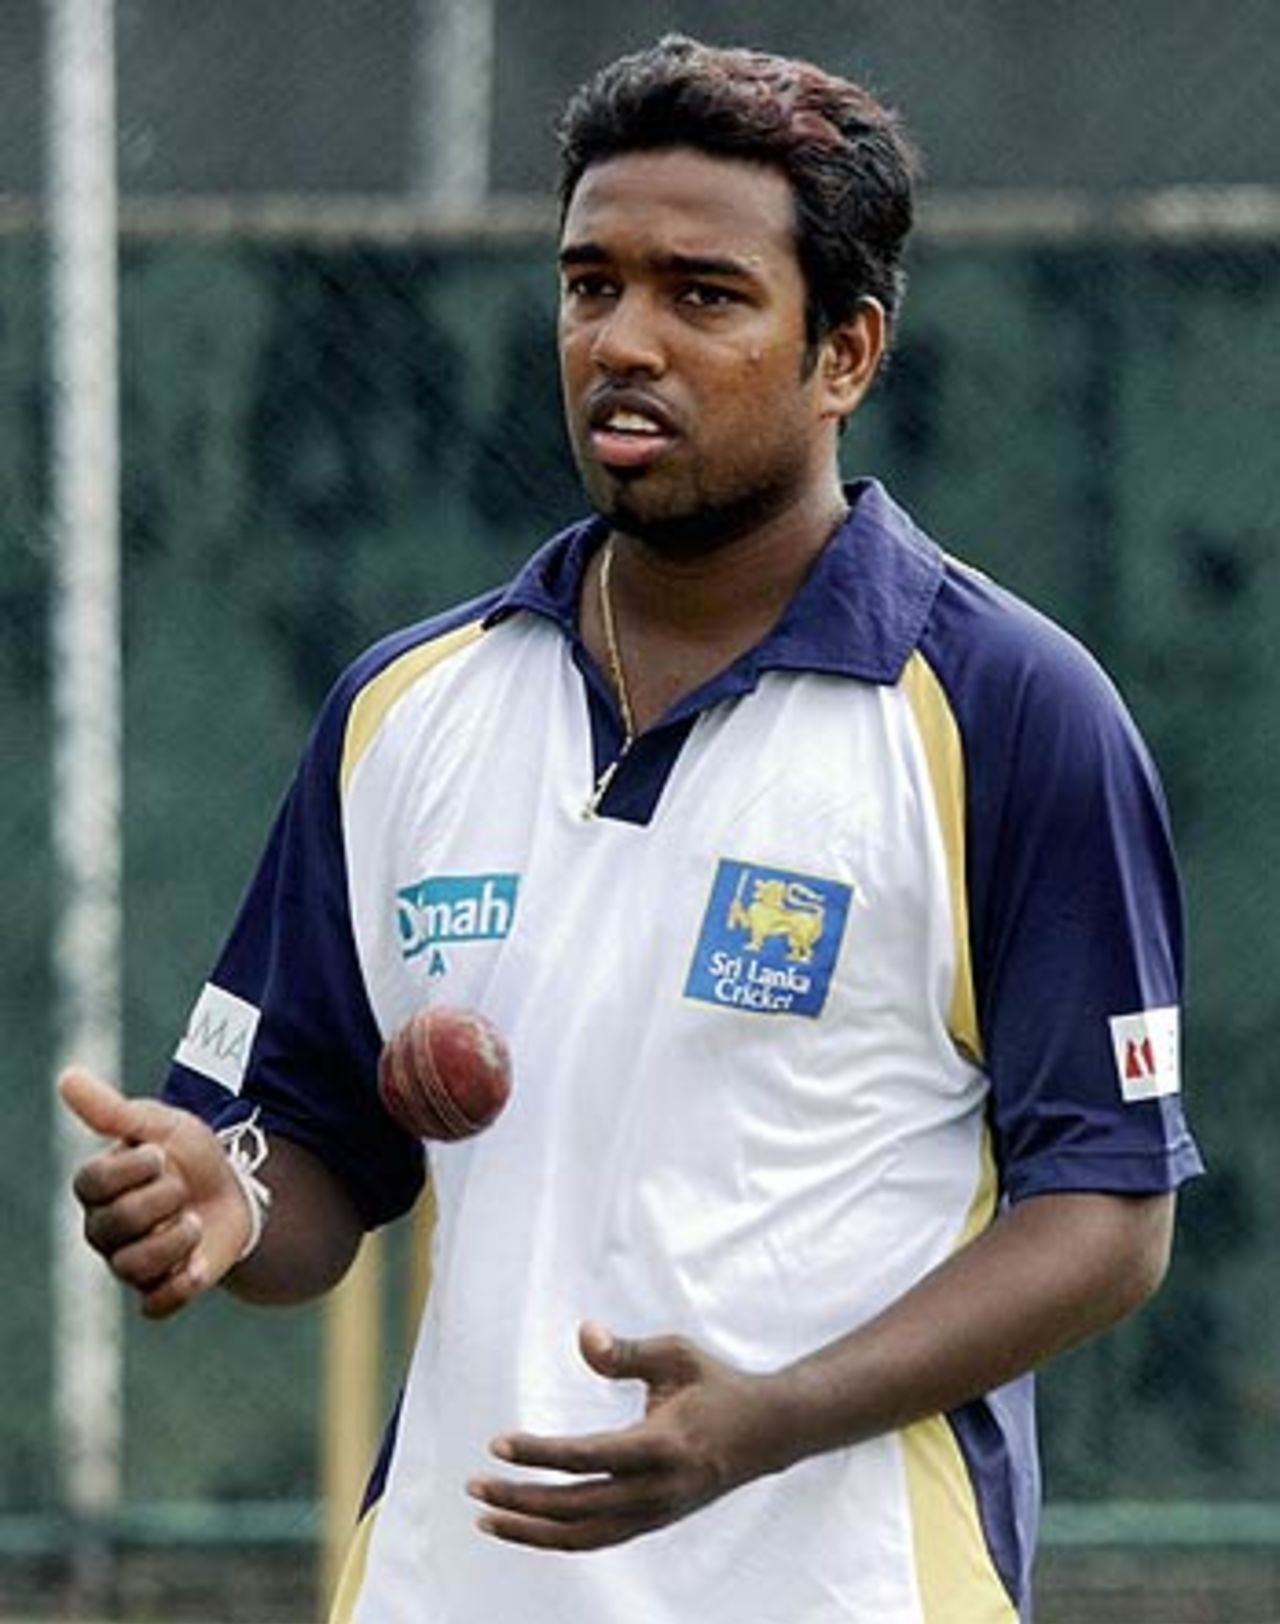 Malinga Bandara waits for his turn to bowl, Sinhalese Sports Club, Colombo, July 22, 2006